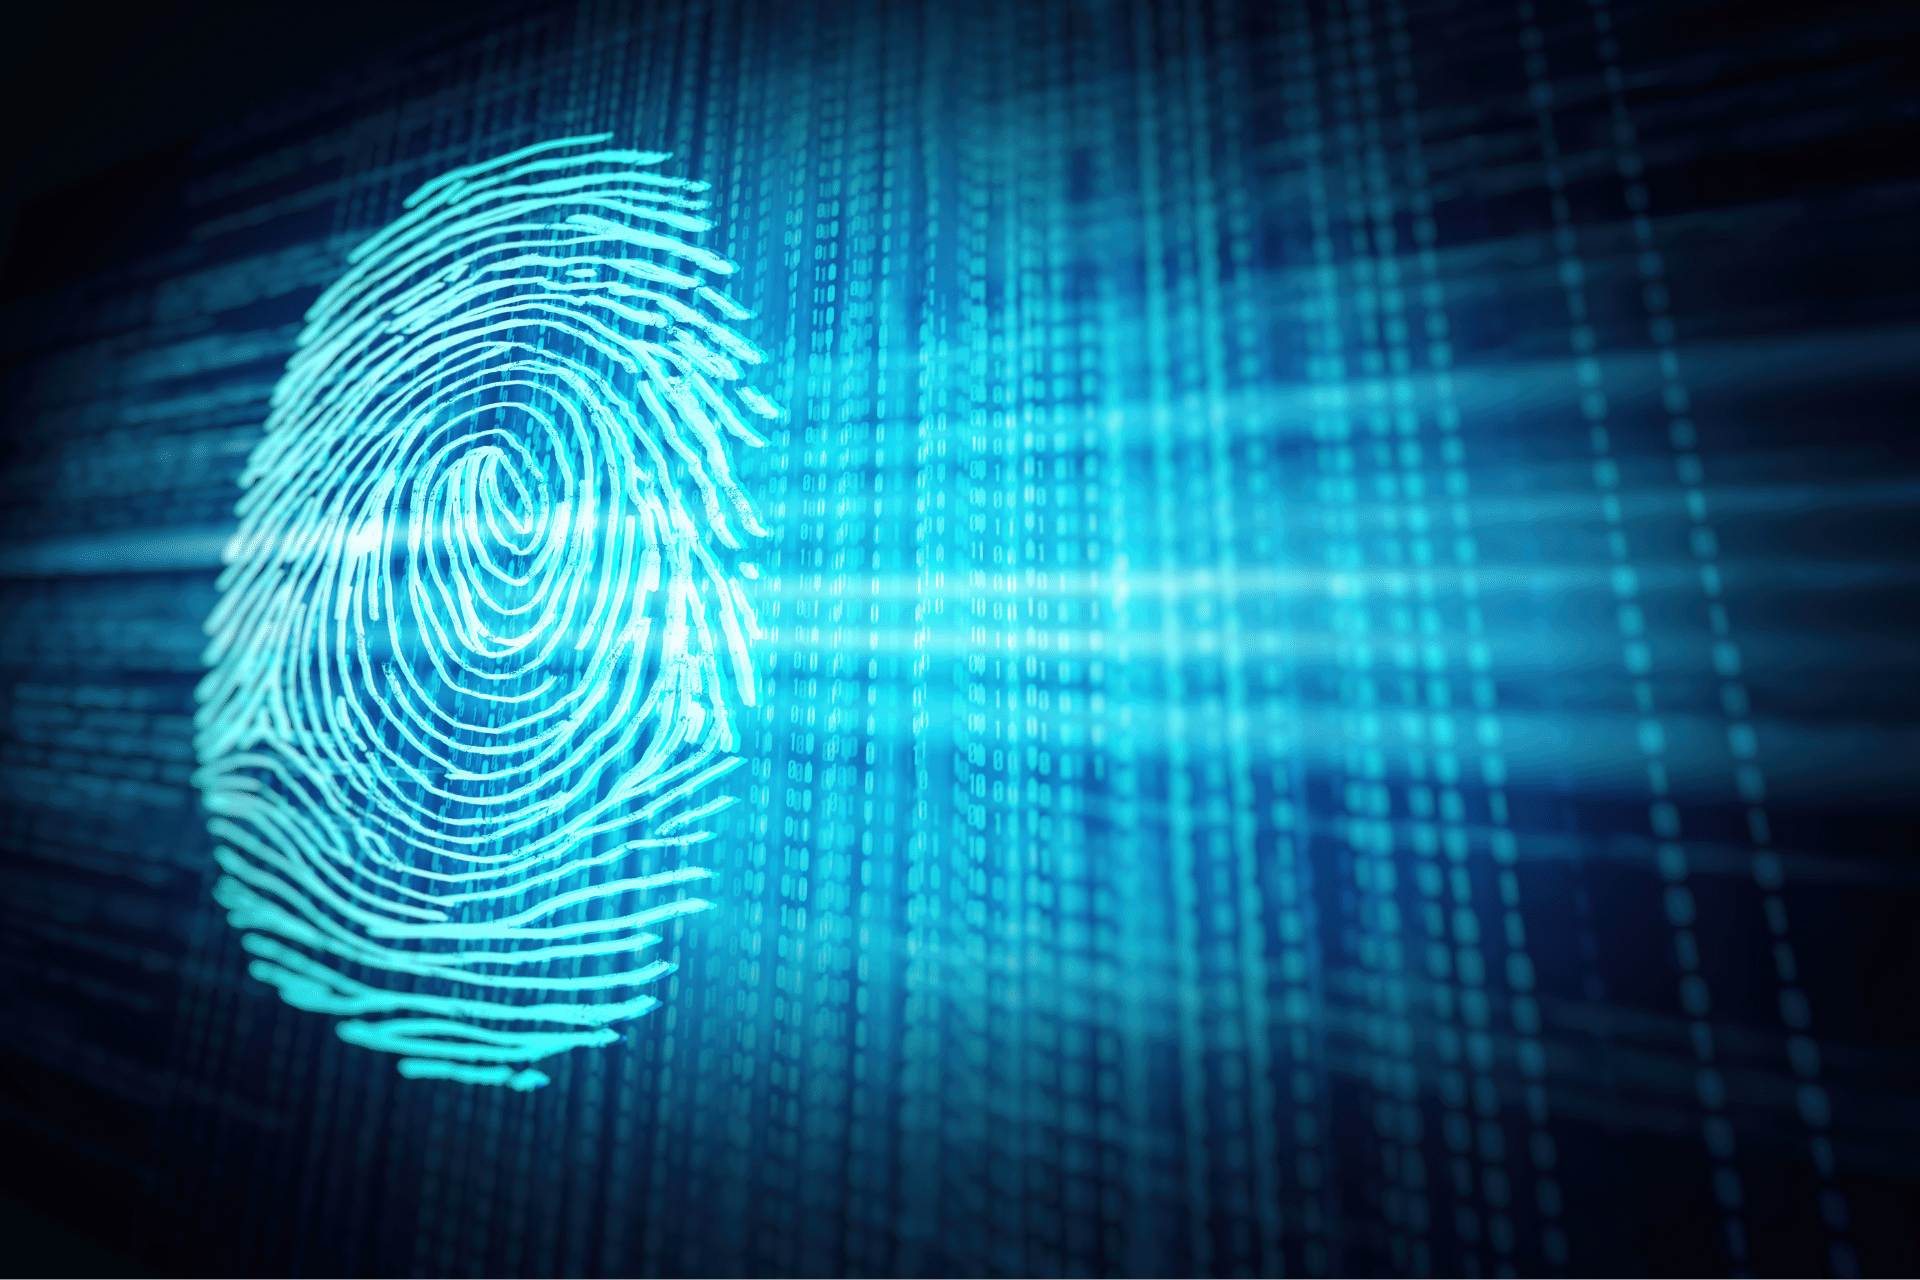 computer image of fingerprint and code